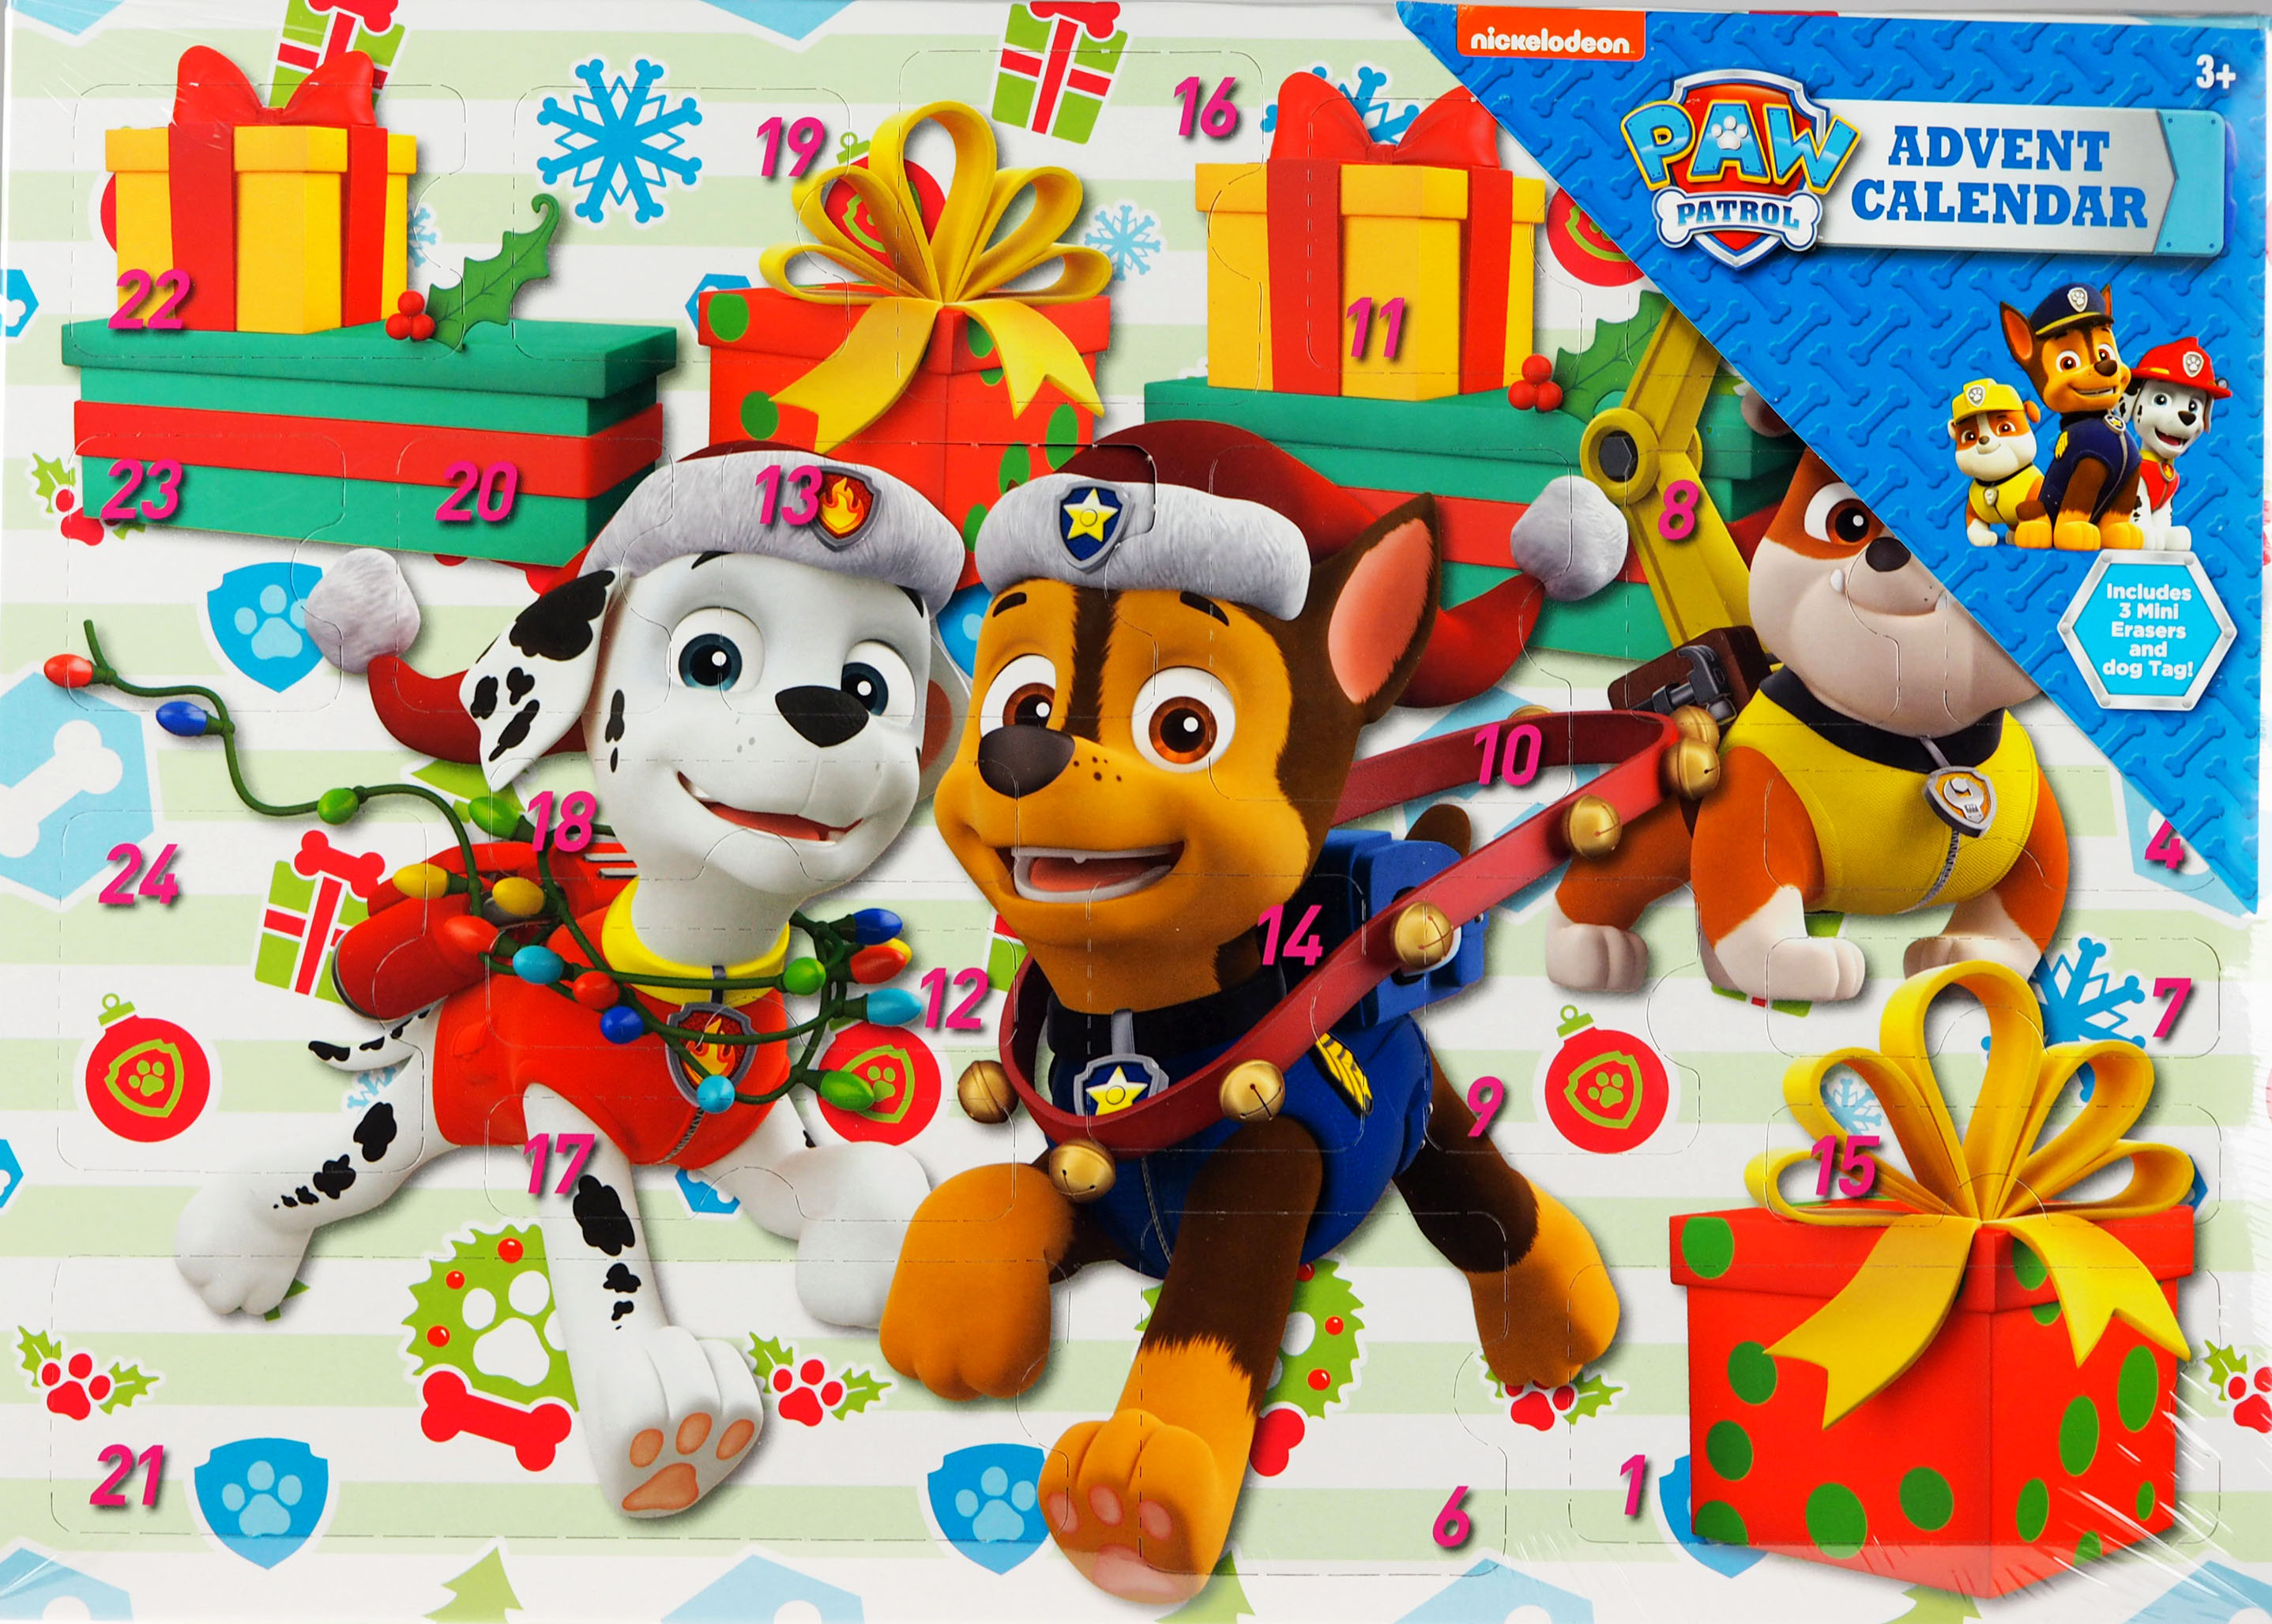 Paw Patrol Christmas Toy & Stationery Treats Gift Advent Calendar eBay